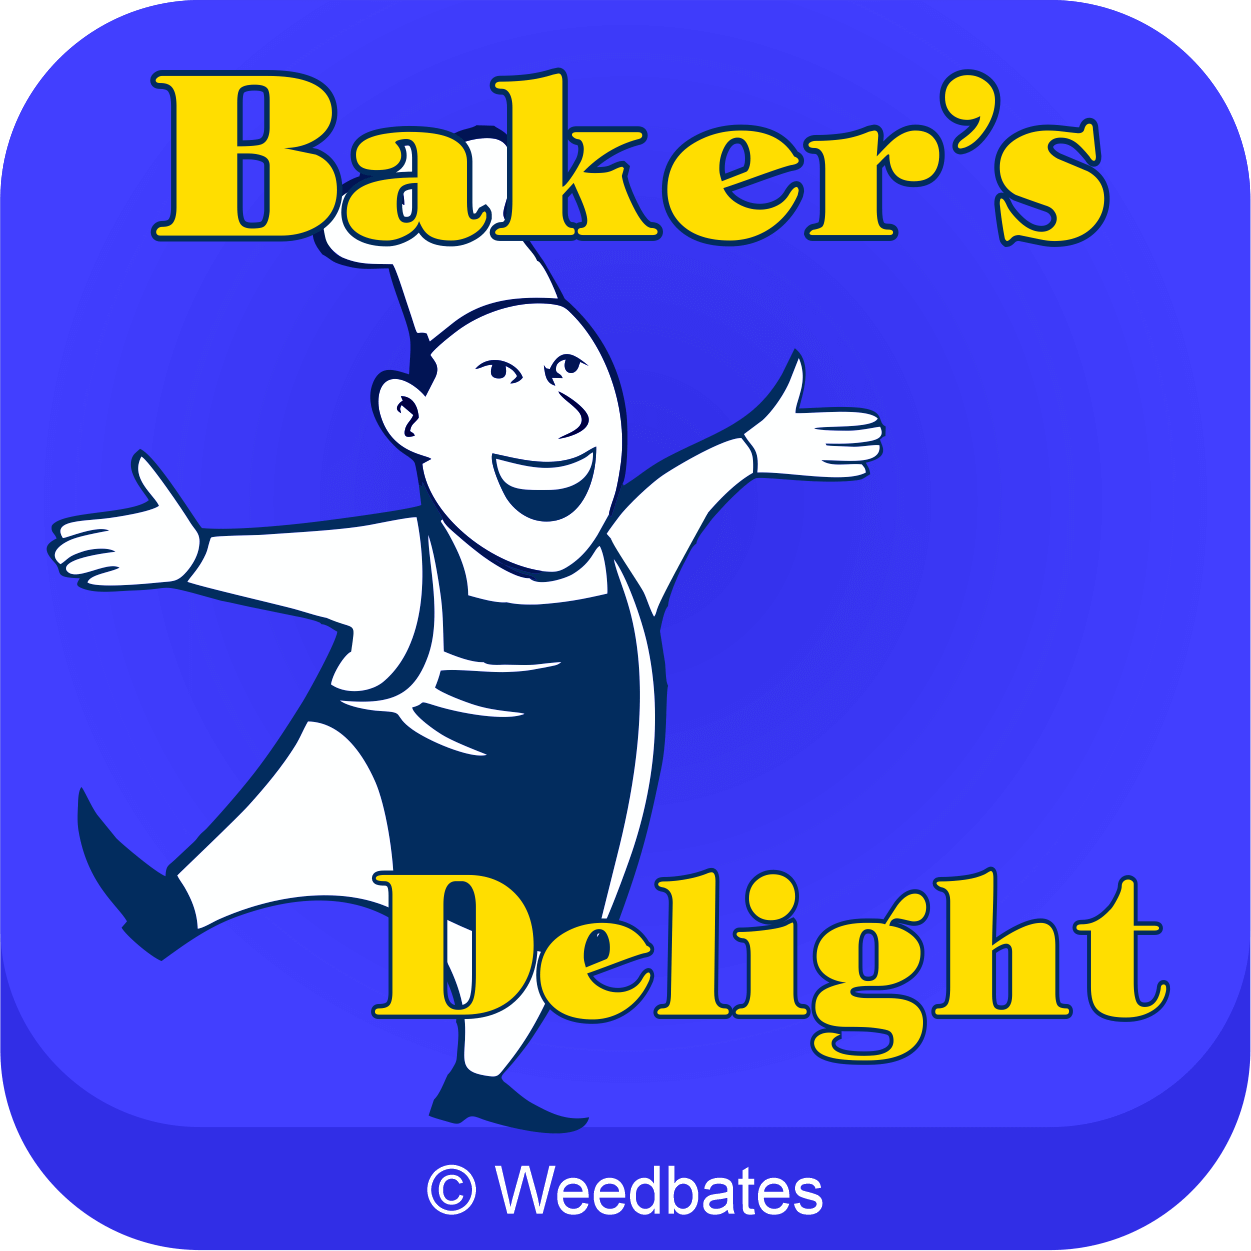 Baker's Delight marijuana strain